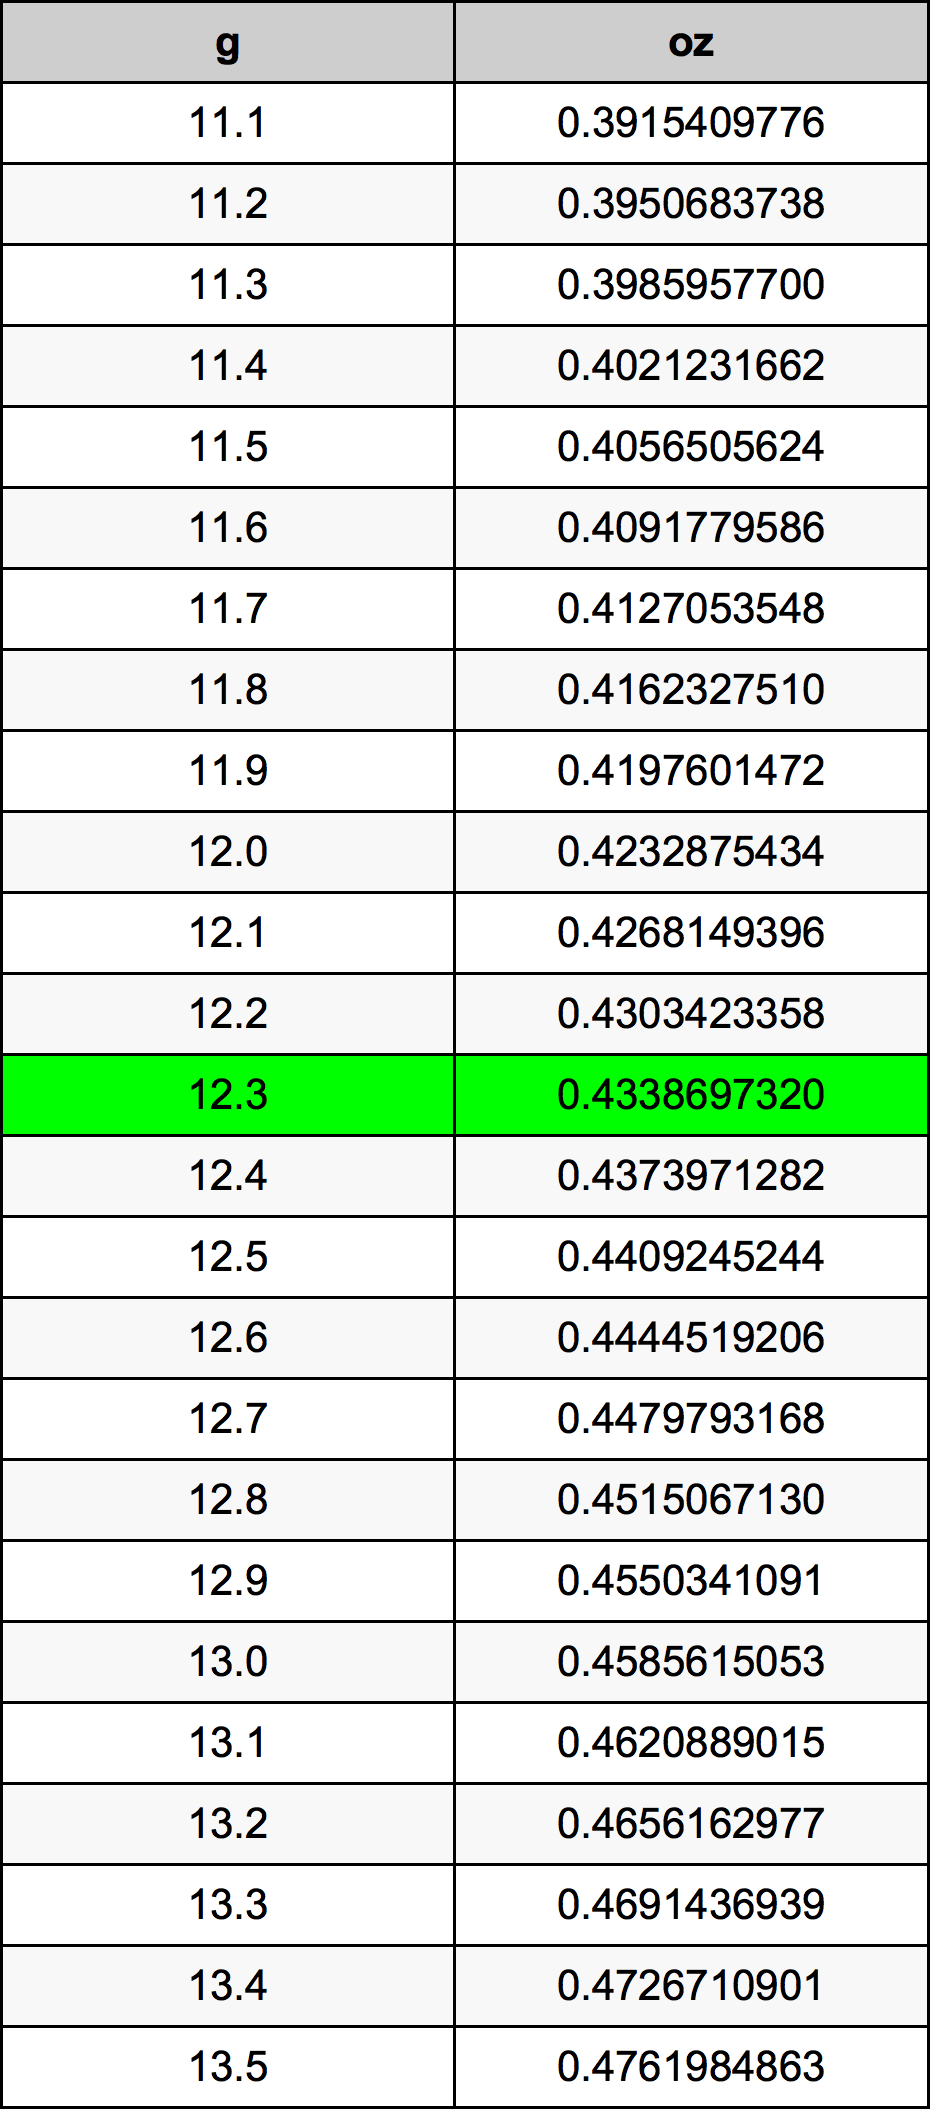 12.3 غرام جدول تحويل